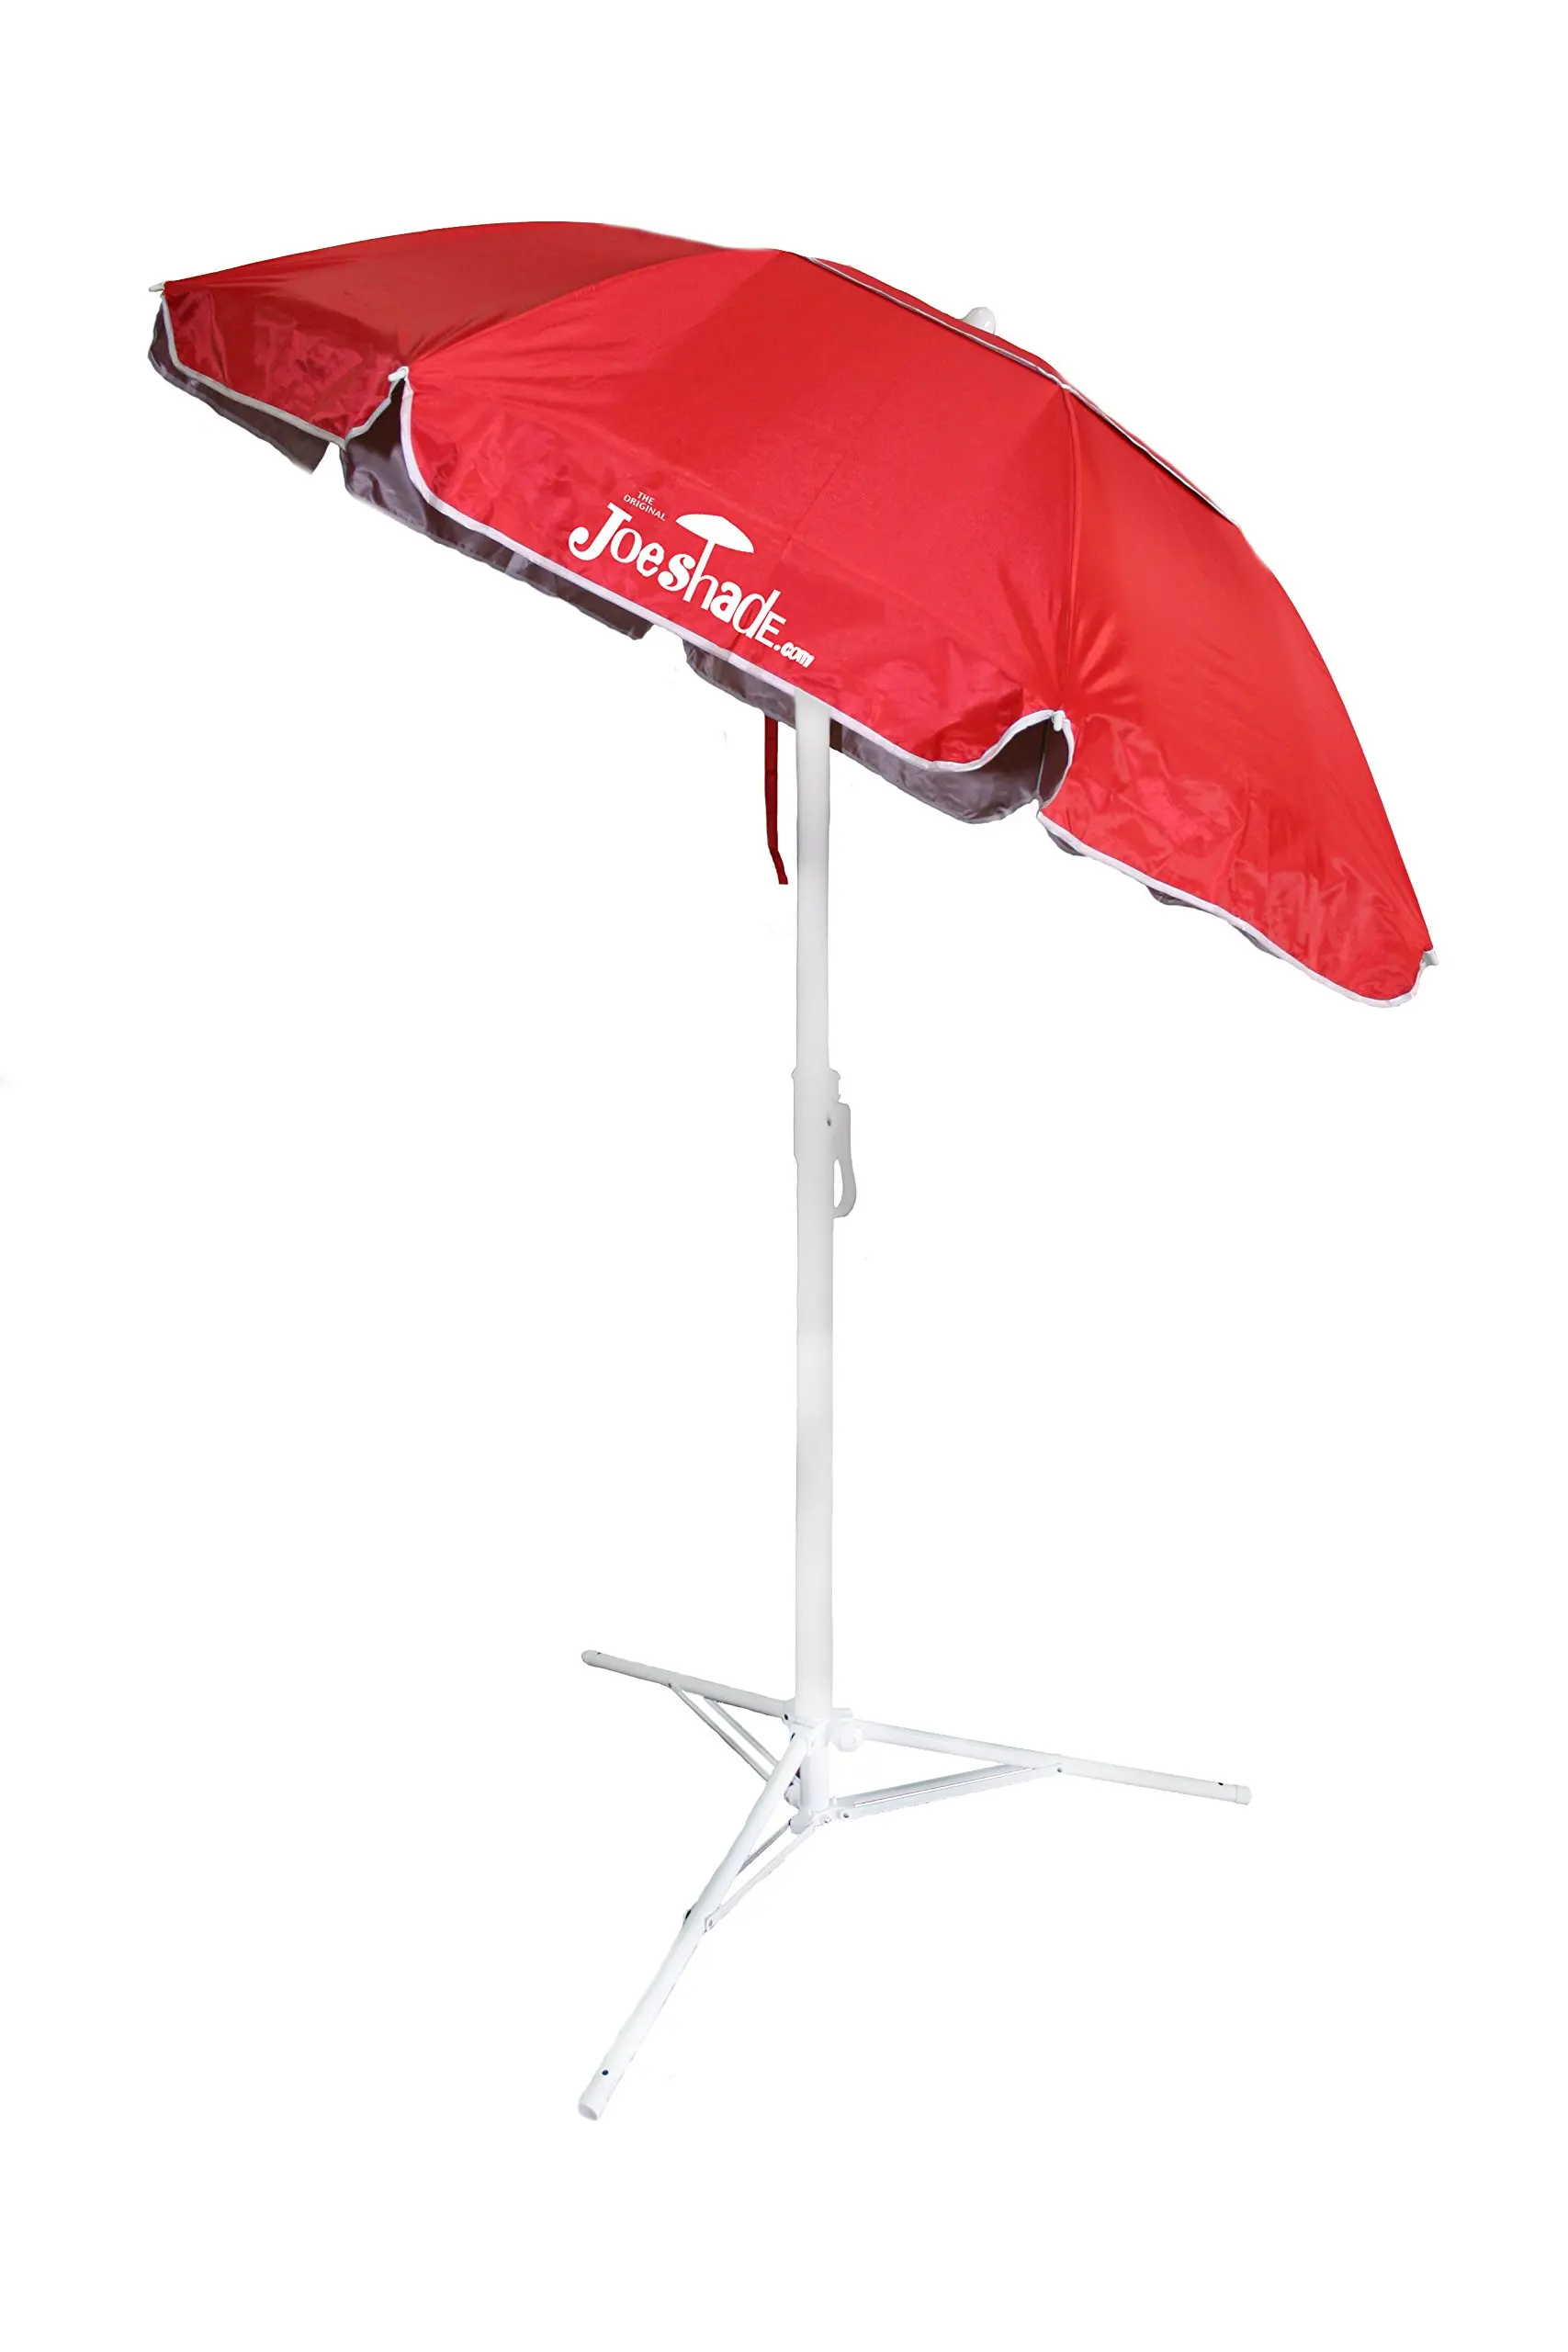 field and stream chair umbrella